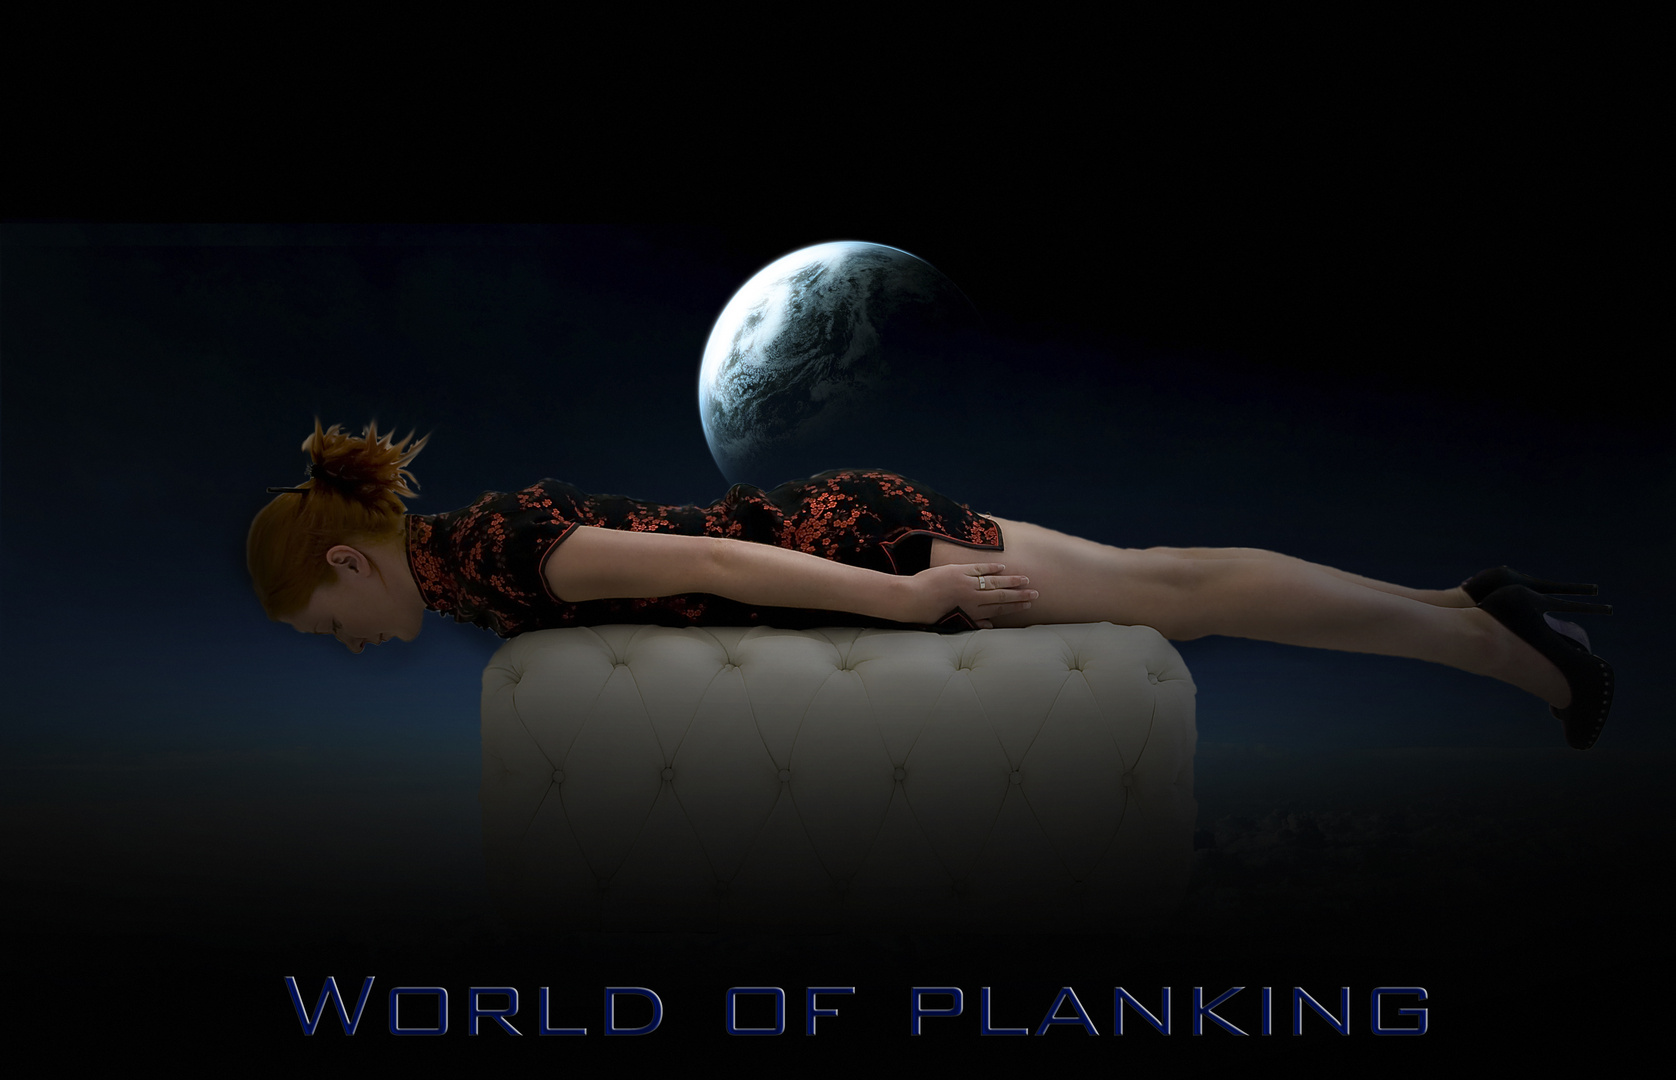 extrem planking #9